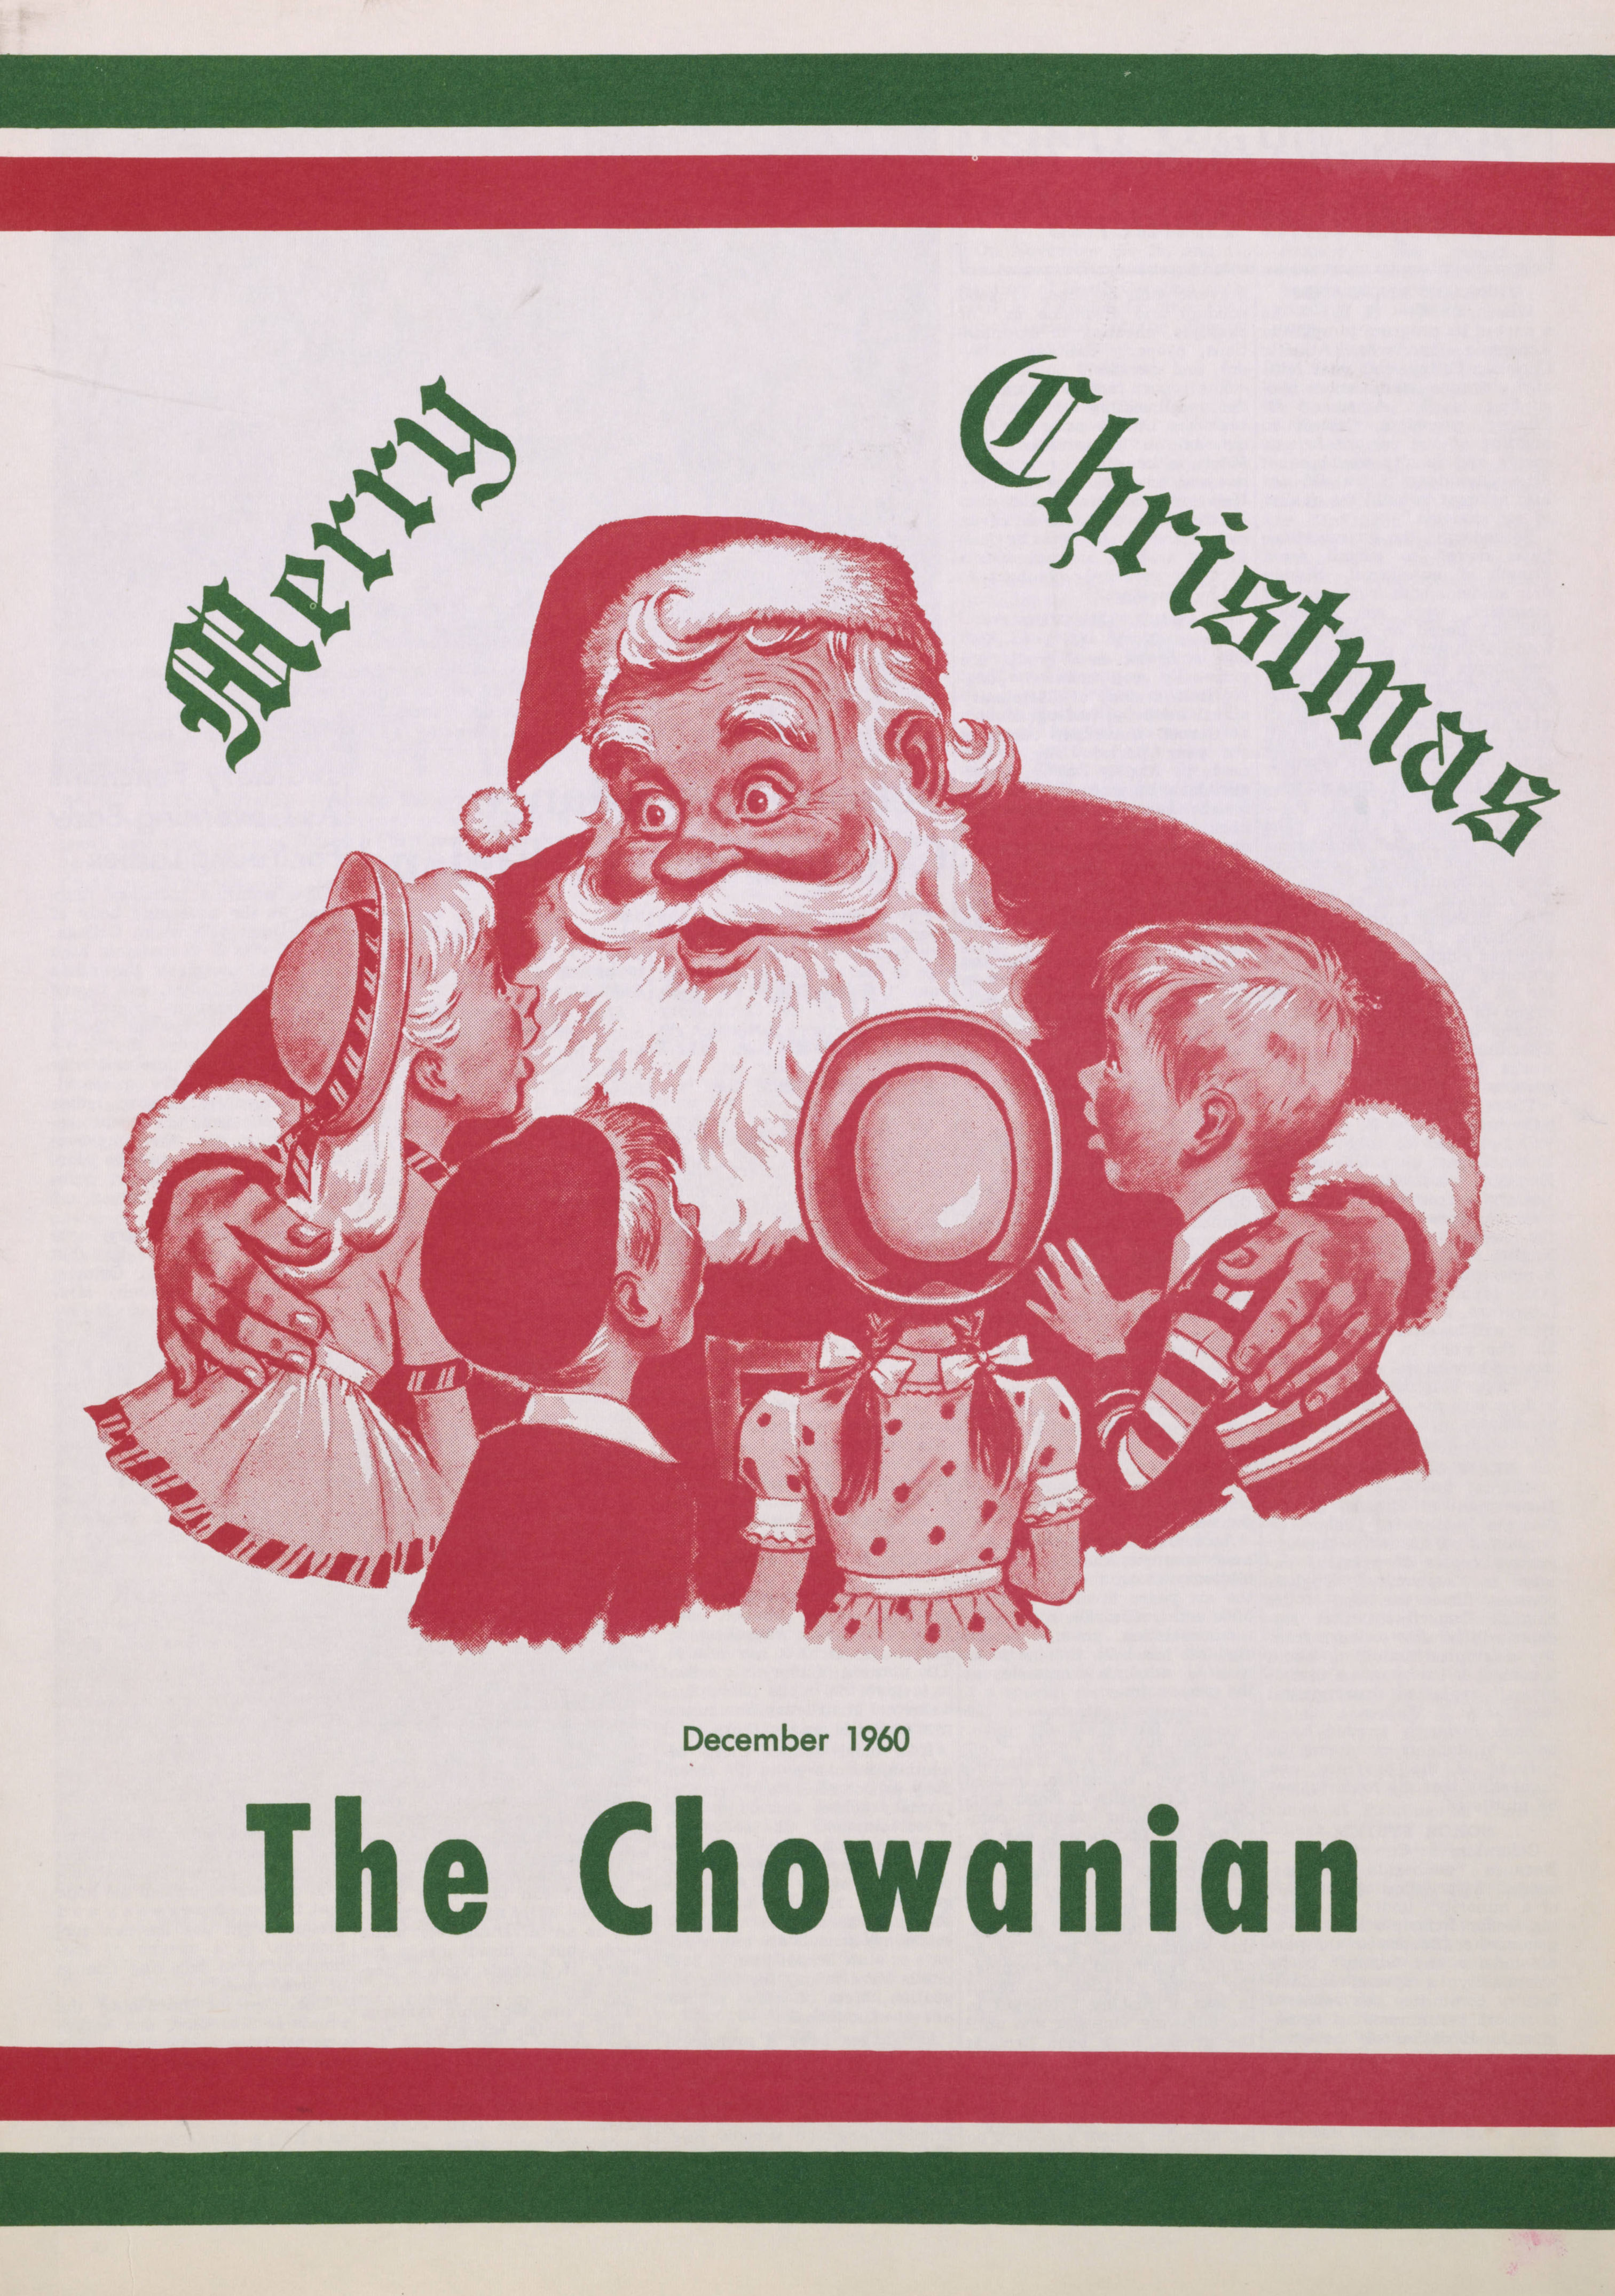 The Chowanian front page - Chowan College student newspaper - Murfreesboro, North Carolina U.S.A. - December 1960